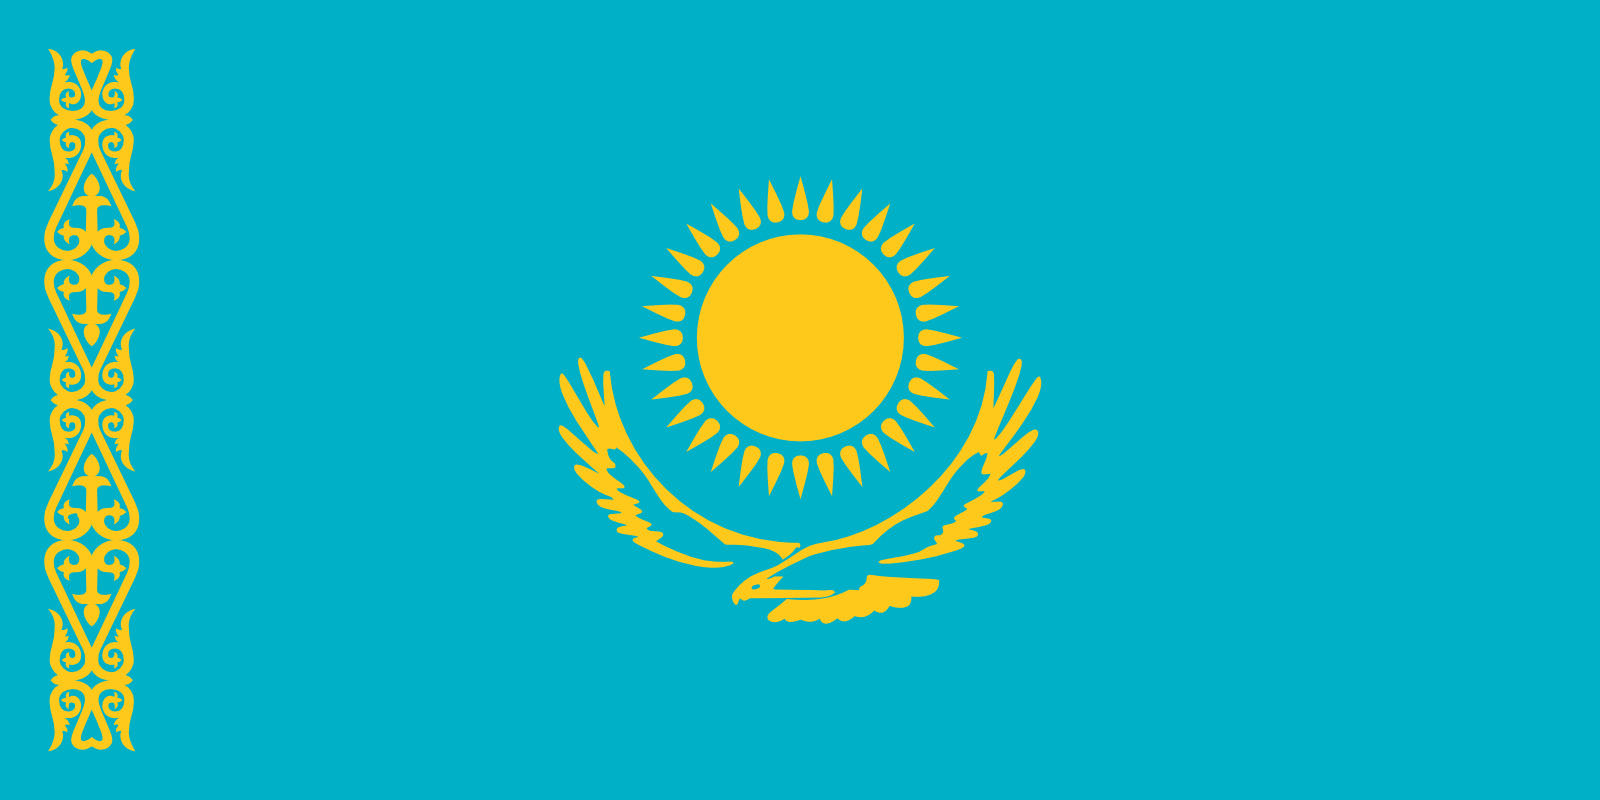 kazakhastan_vyncs  gps tracker